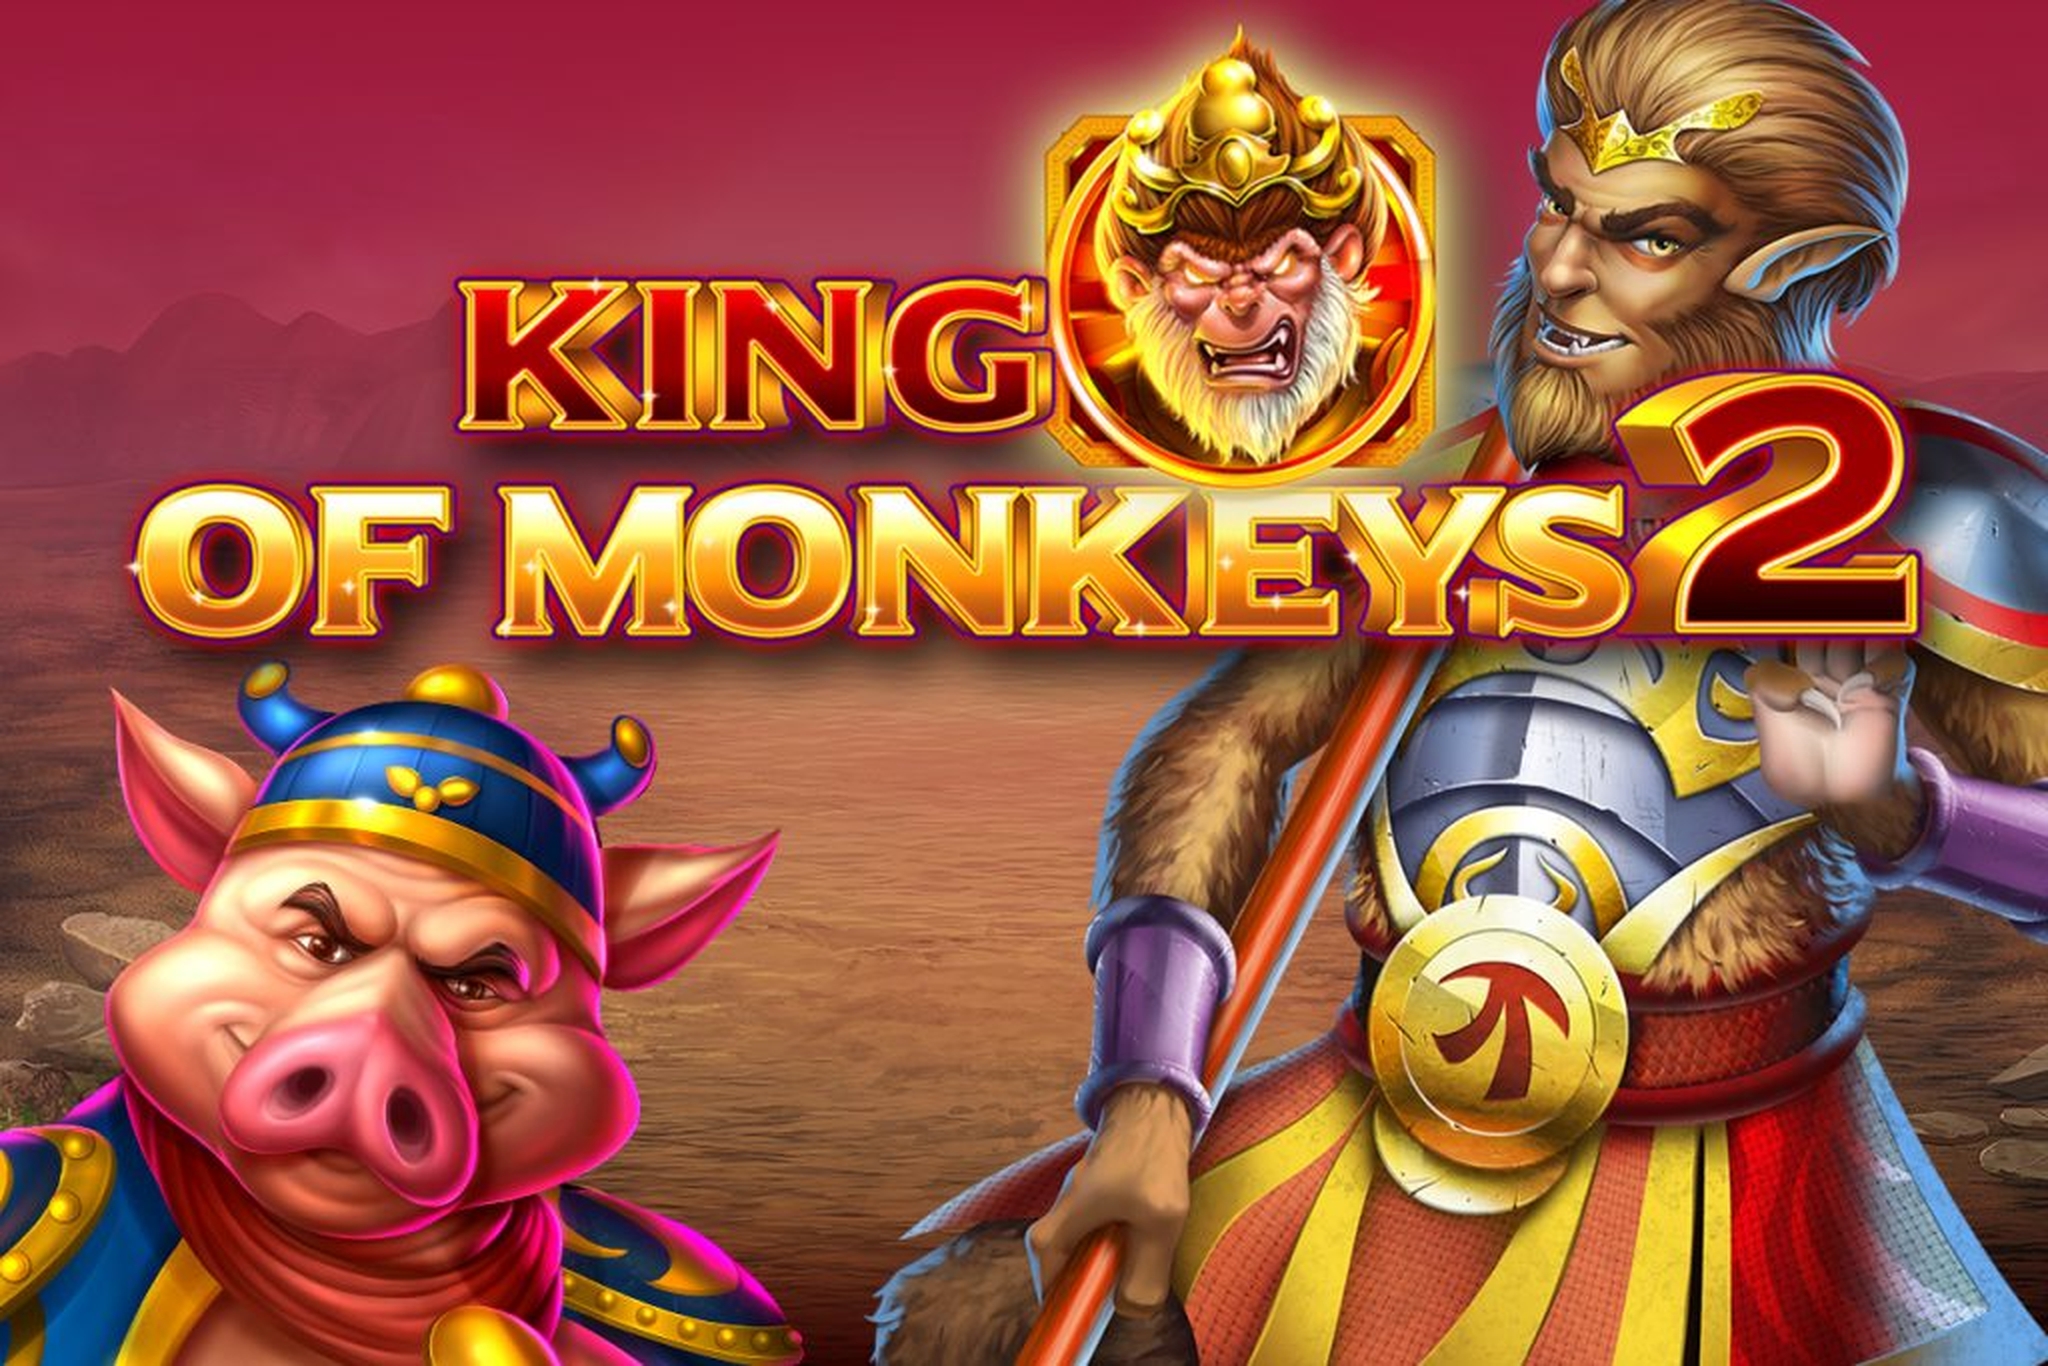 King Of Monkeys 2 demo